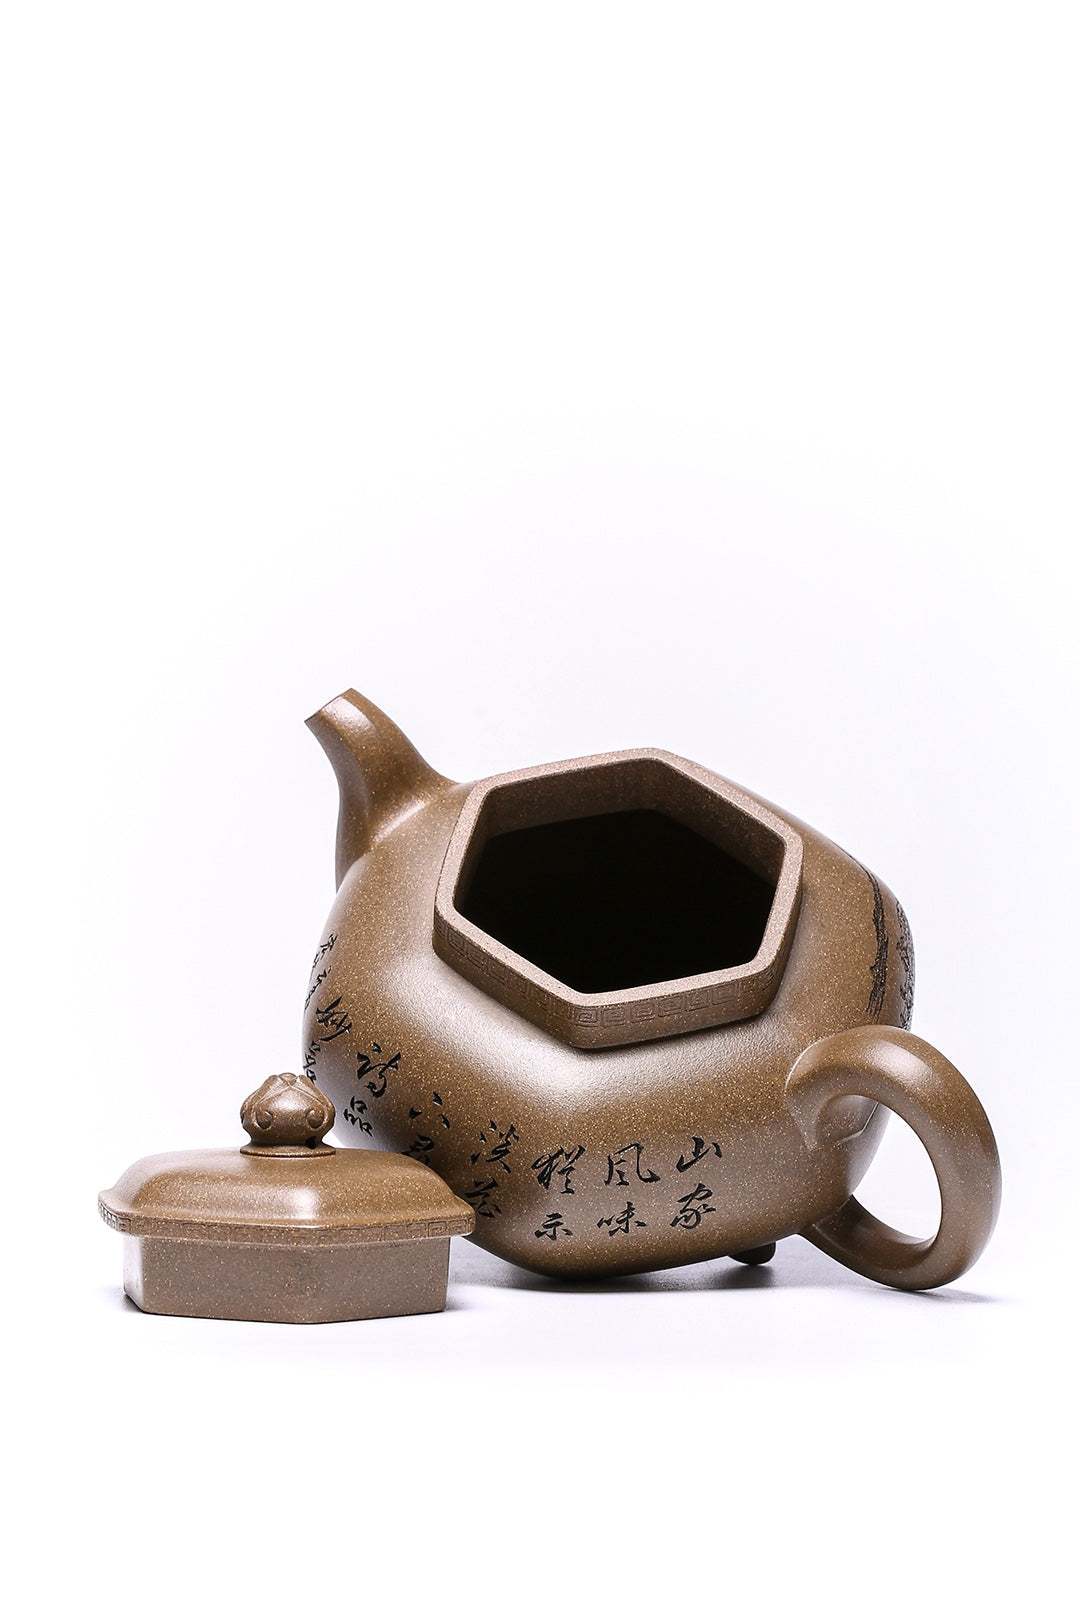 Laoqing Duan Three-legged Ruyi Zisha Teapot